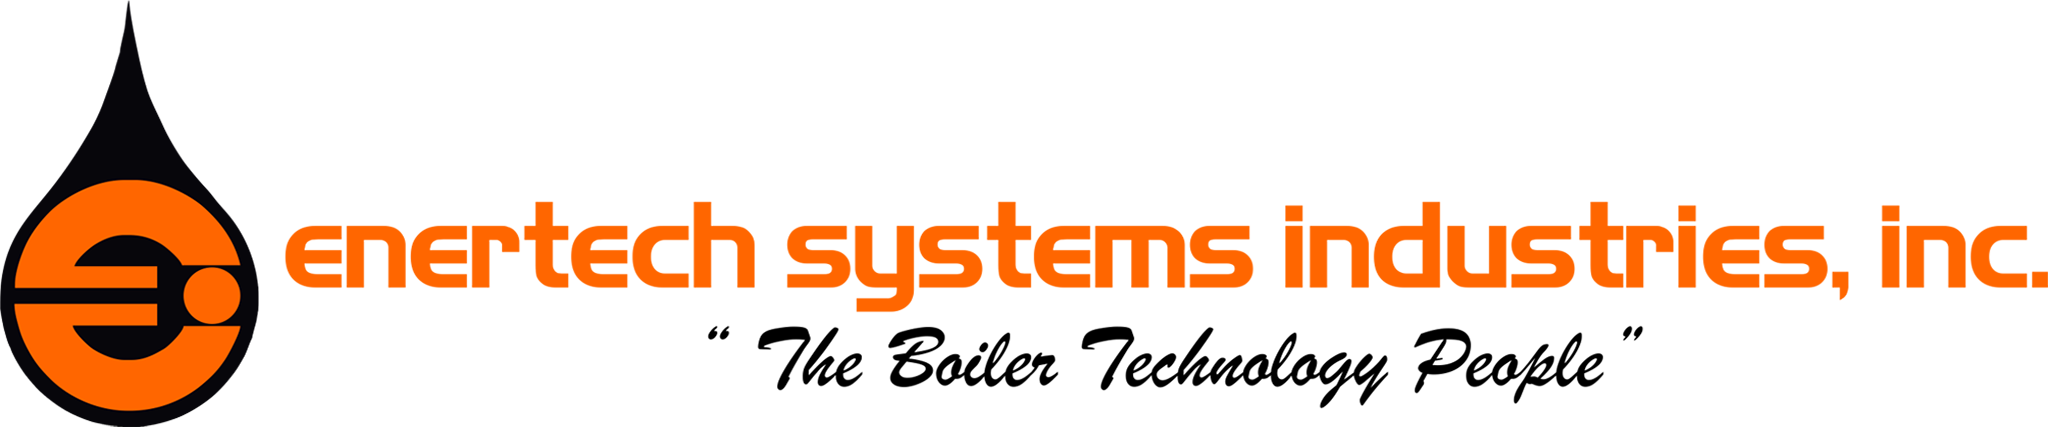 Enertech System Industries Inc.